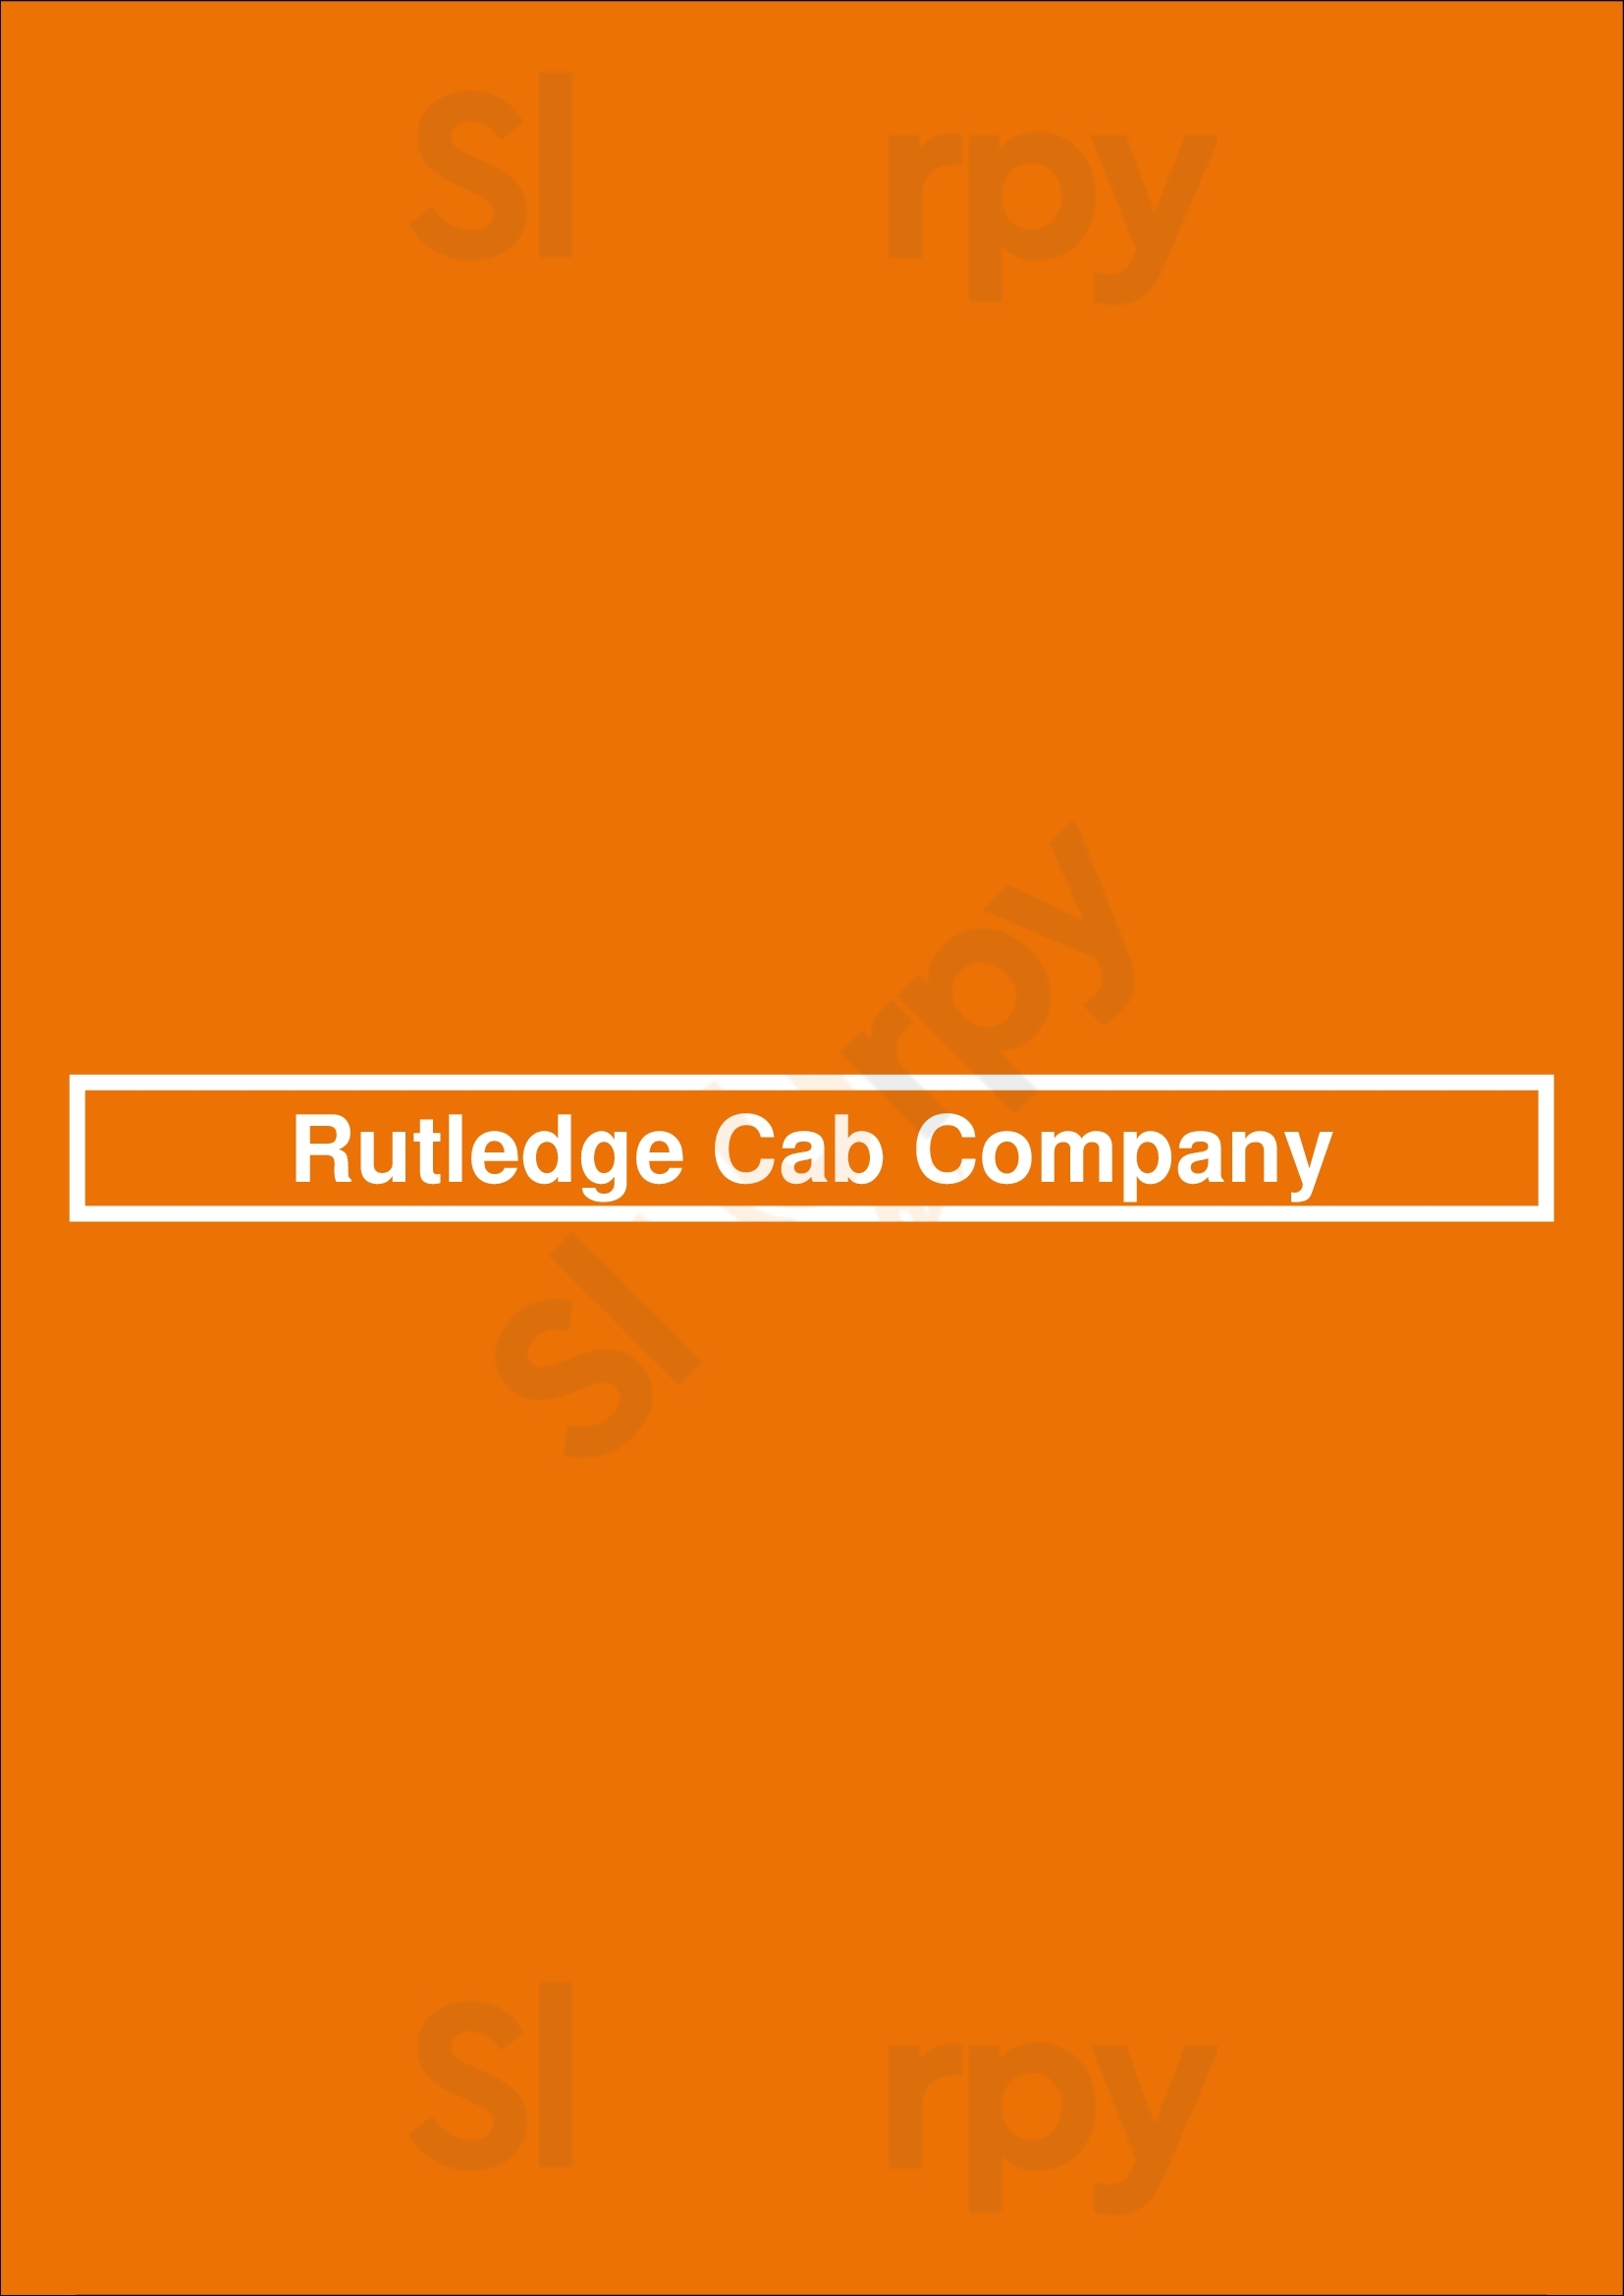 Rutledge Cab Company Charleston Menu - 1